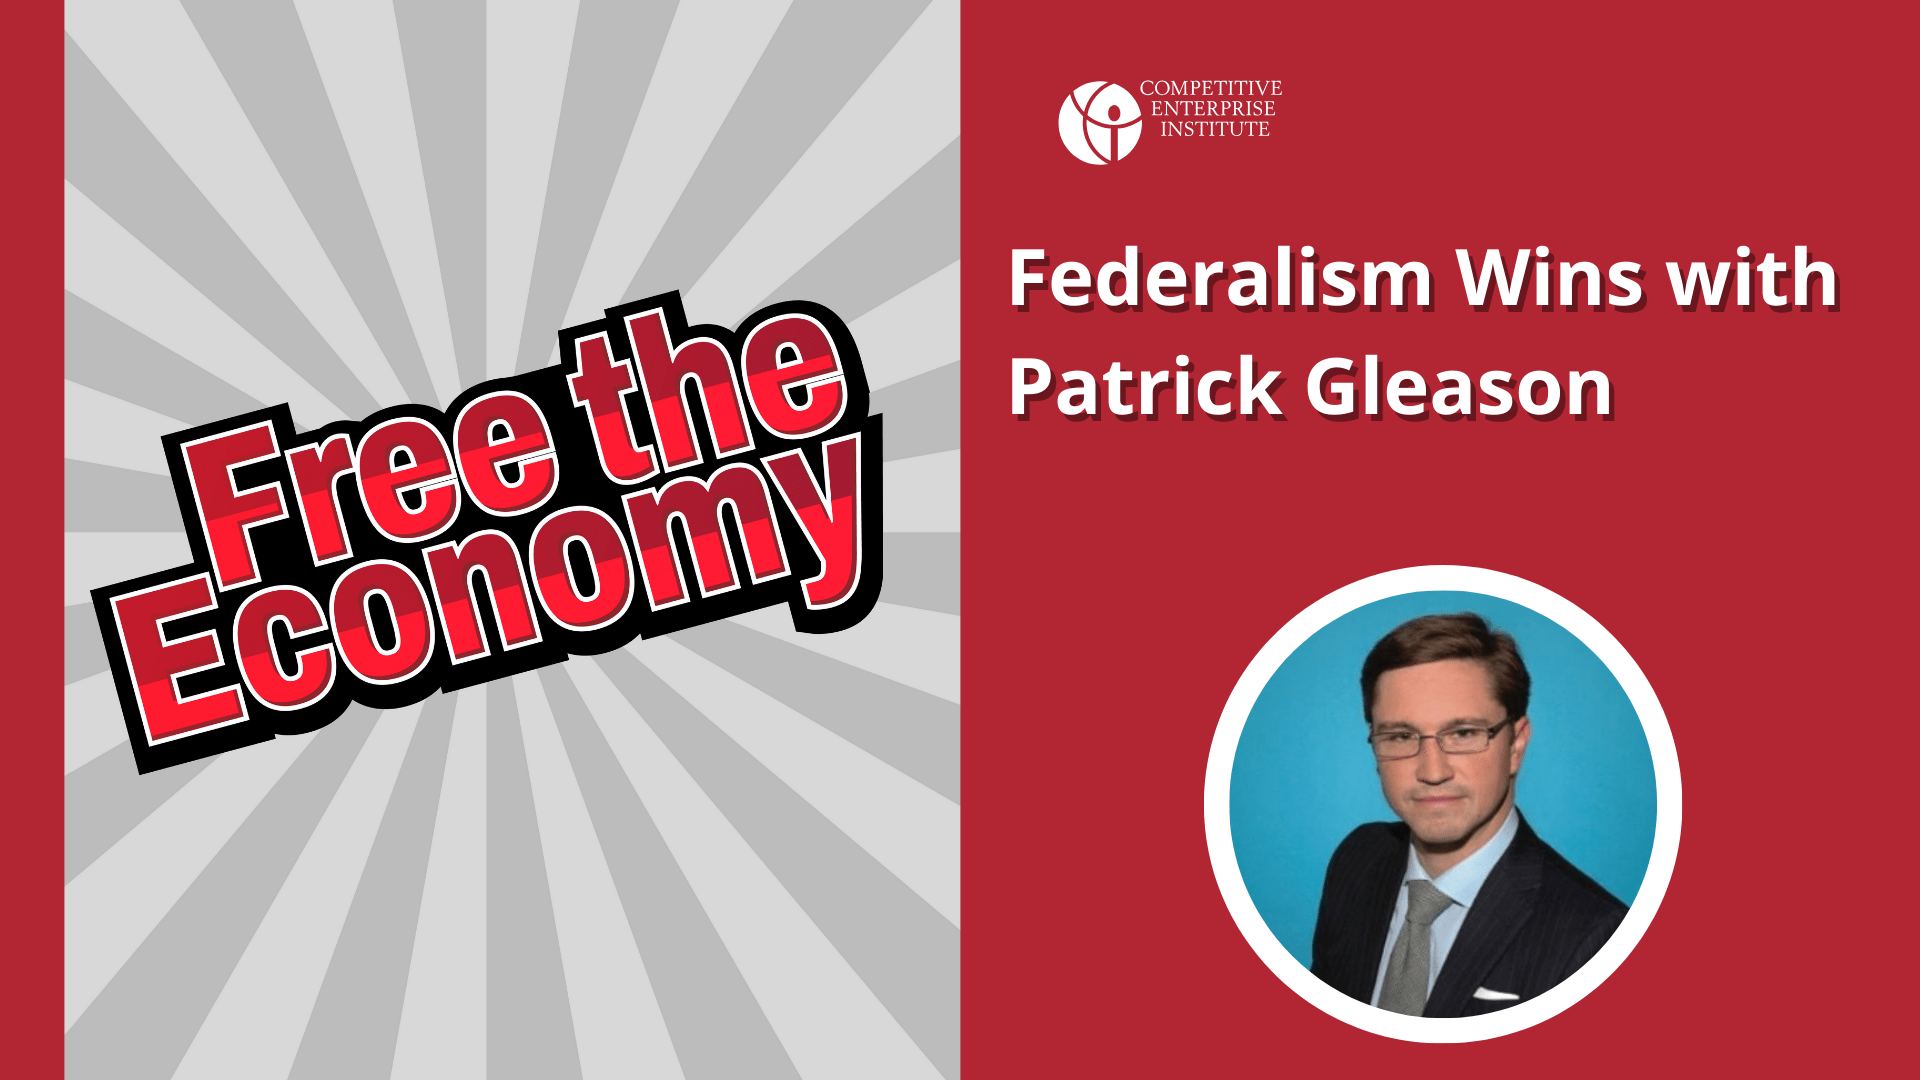 Federalism Wins with Patrick Gleason